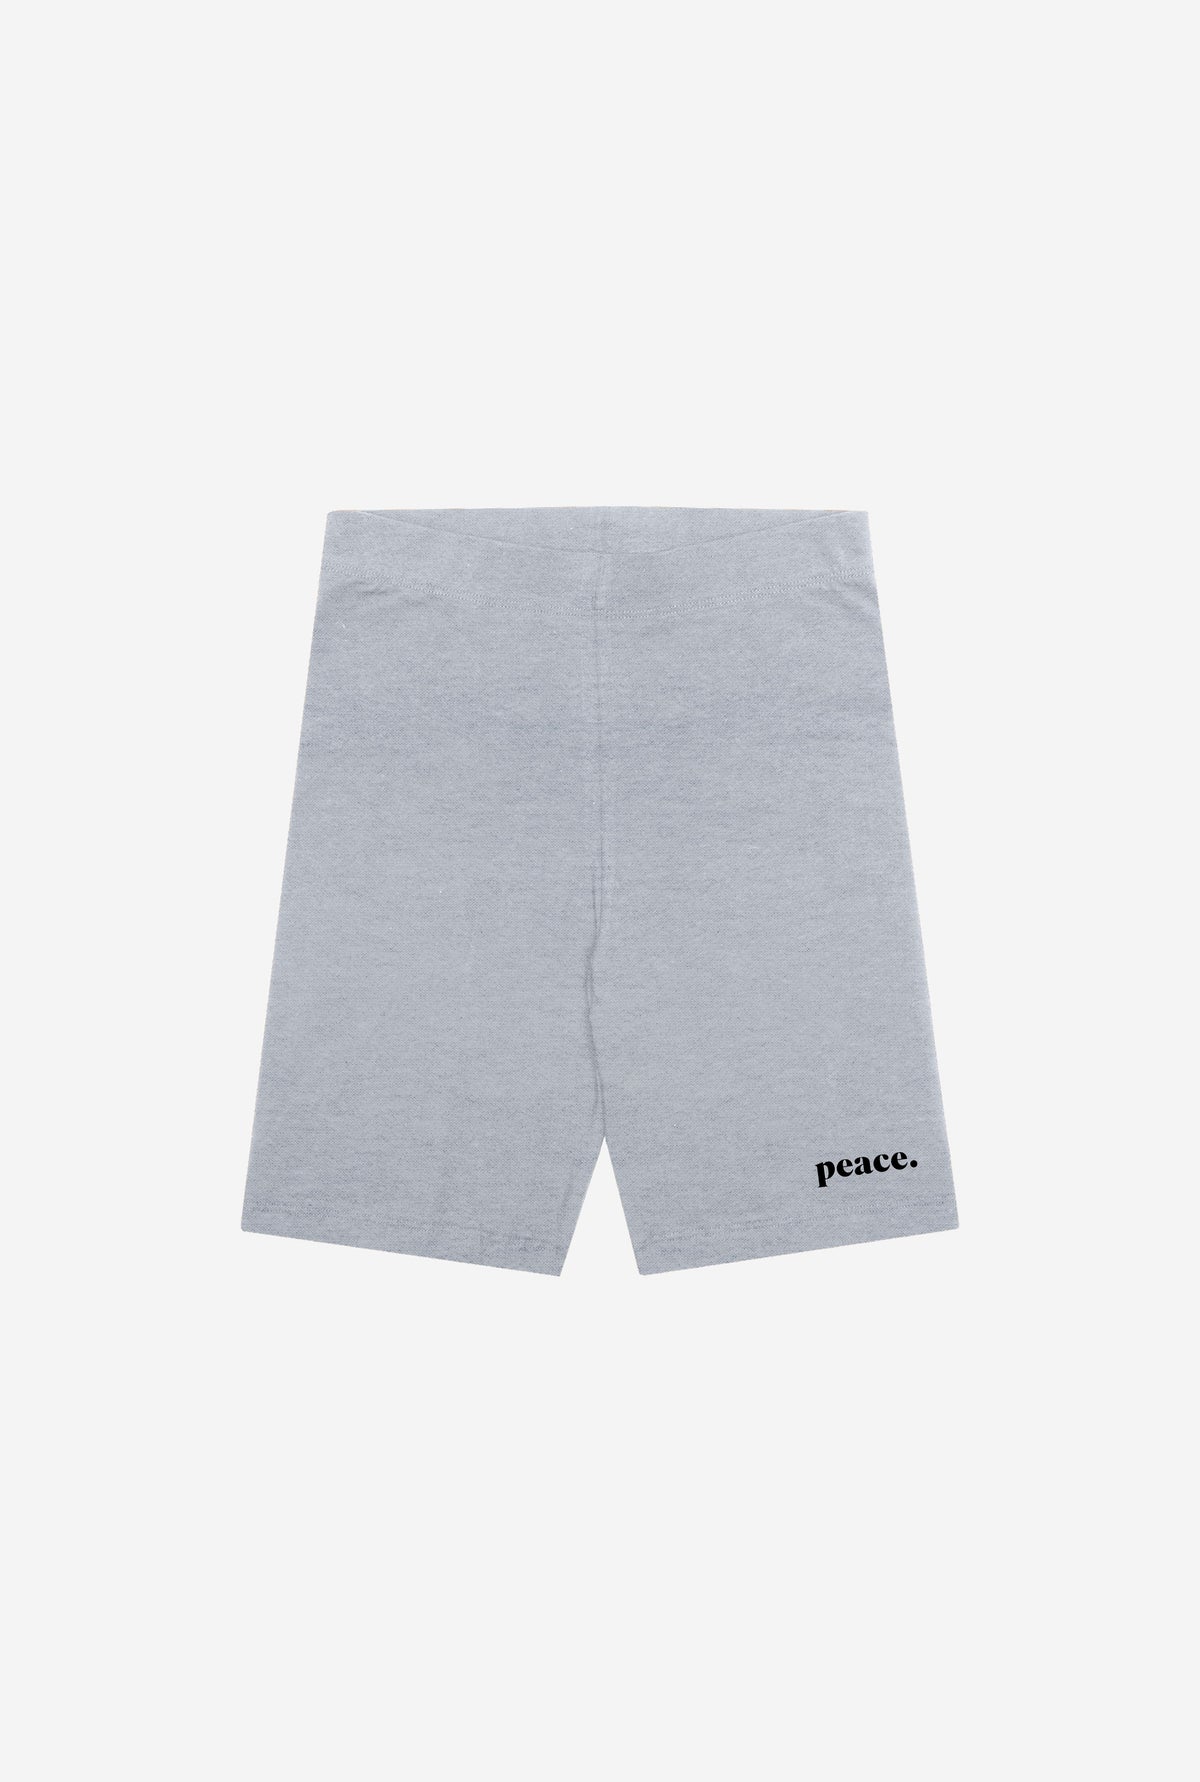 Peace Bike Shorts - Grey